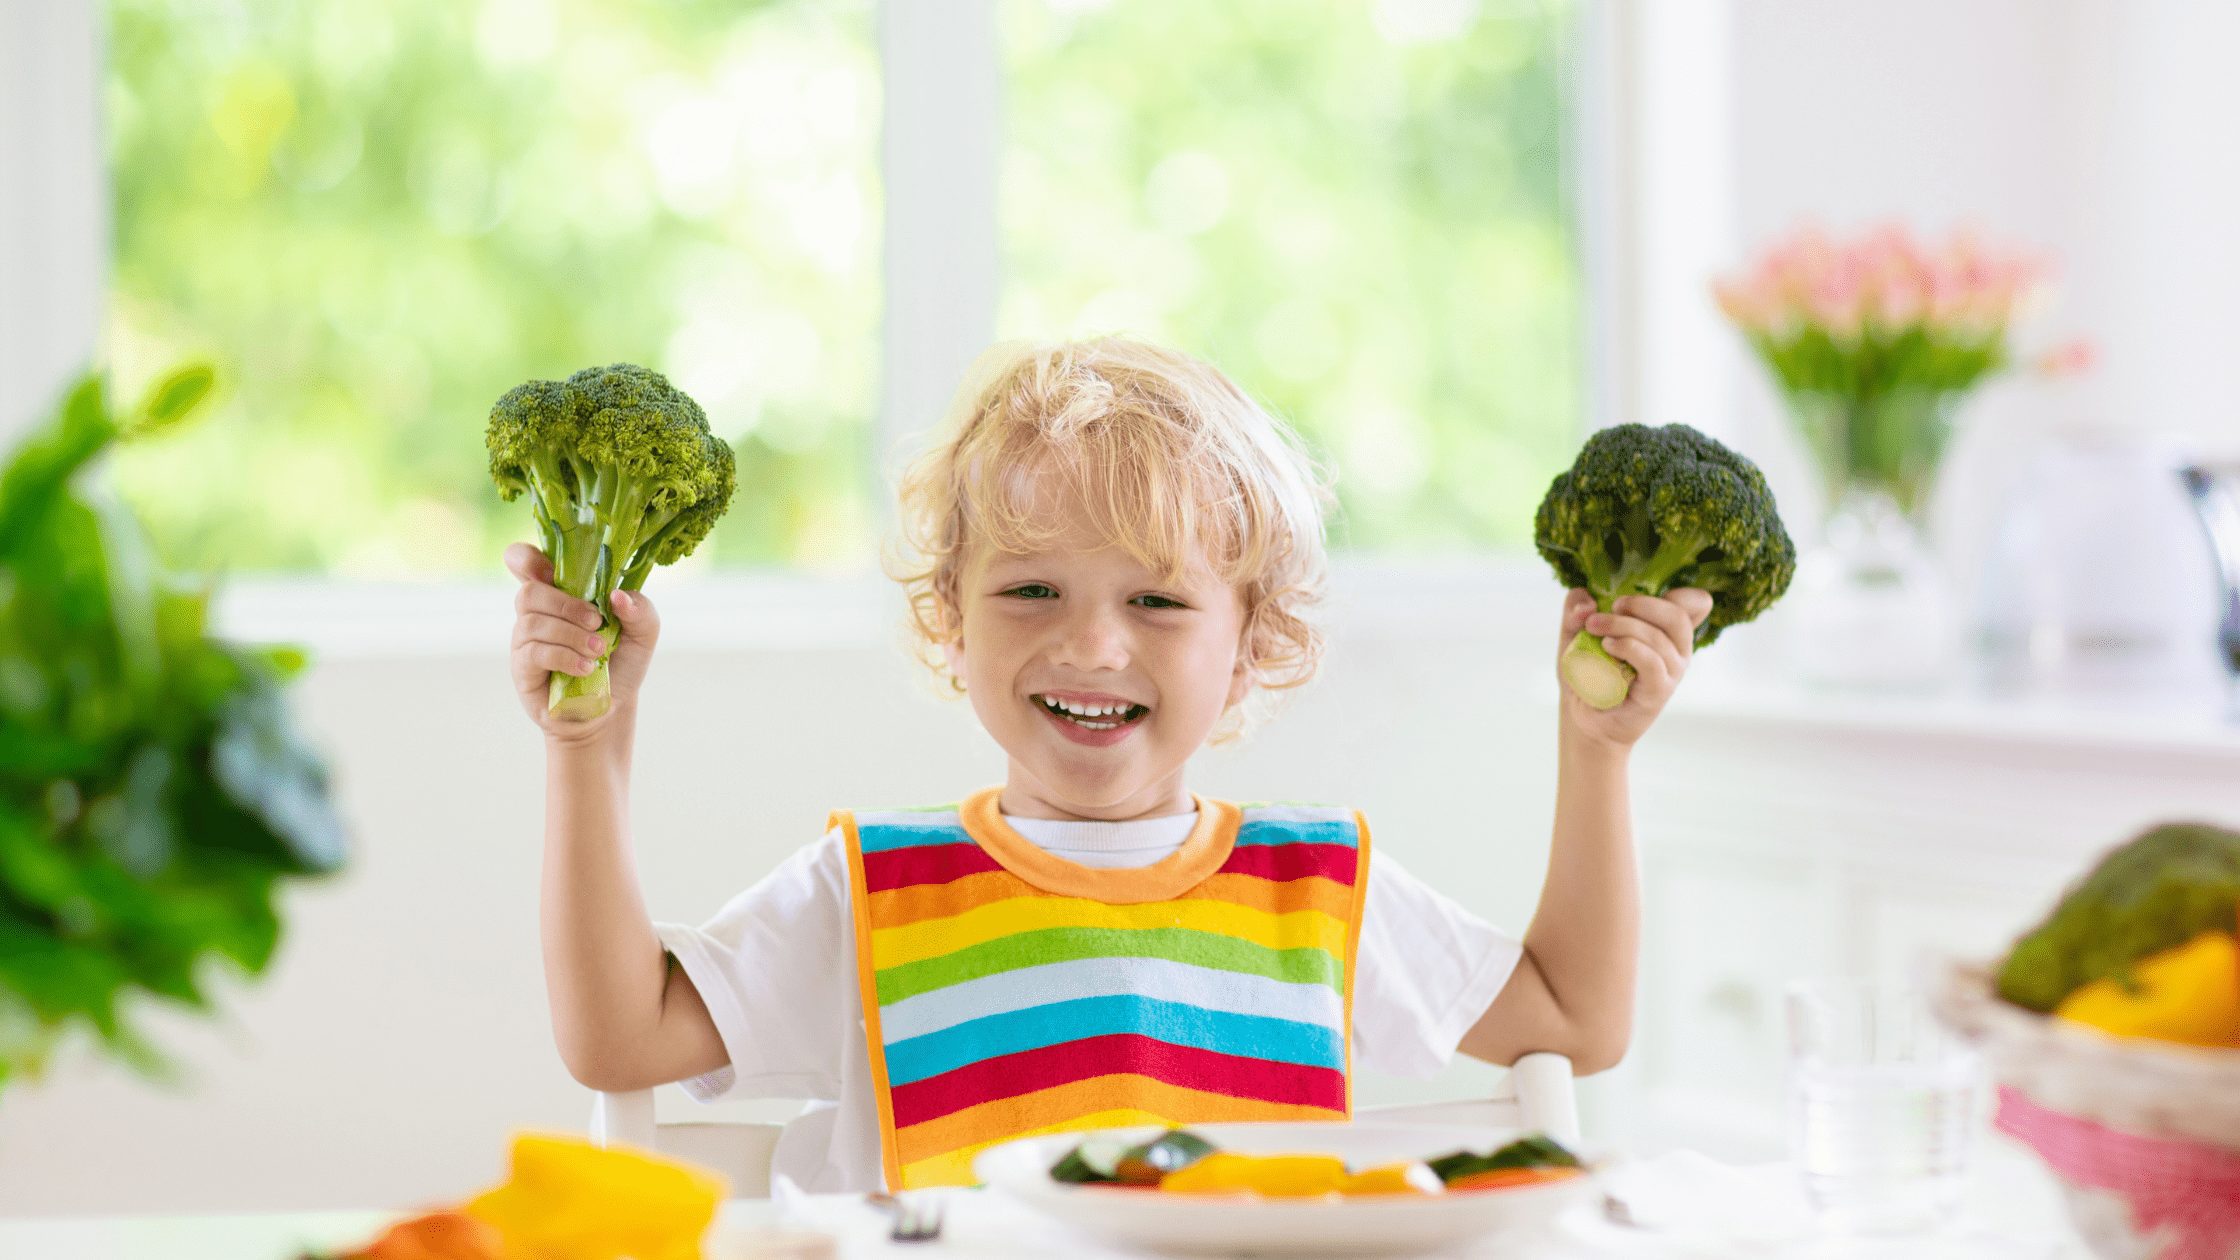 kid holding broccoli